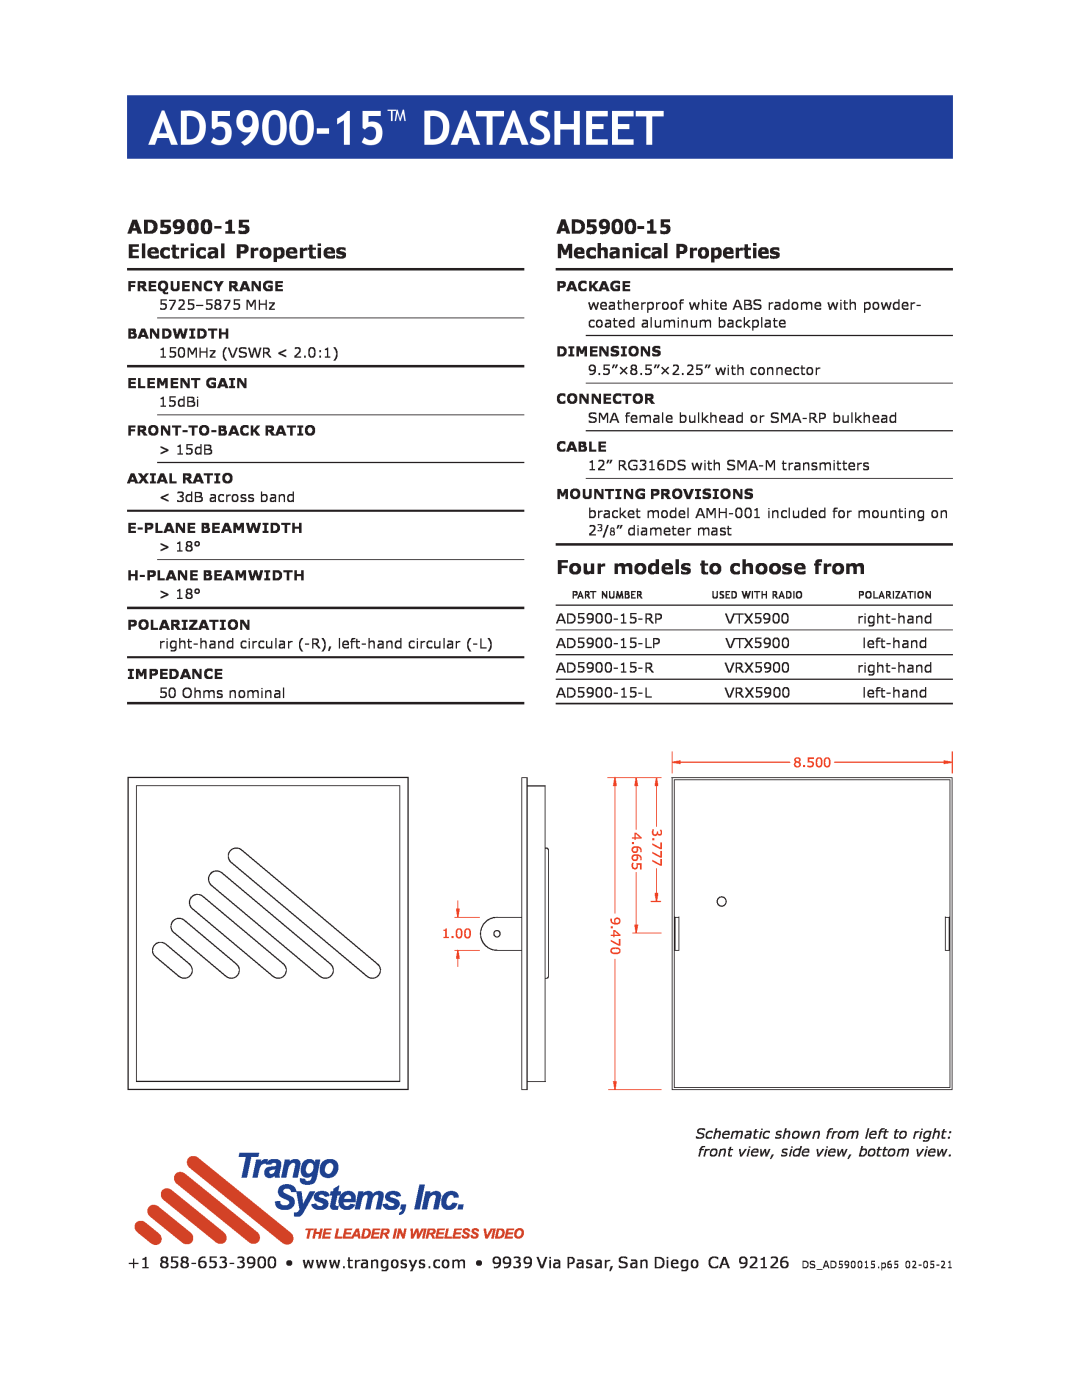 Trango Broadband AD5900-15-R manual AD5900-15 DATASHEET, AD5900-15 Electrical Properties, AD5900-15 Mechanical Properties 